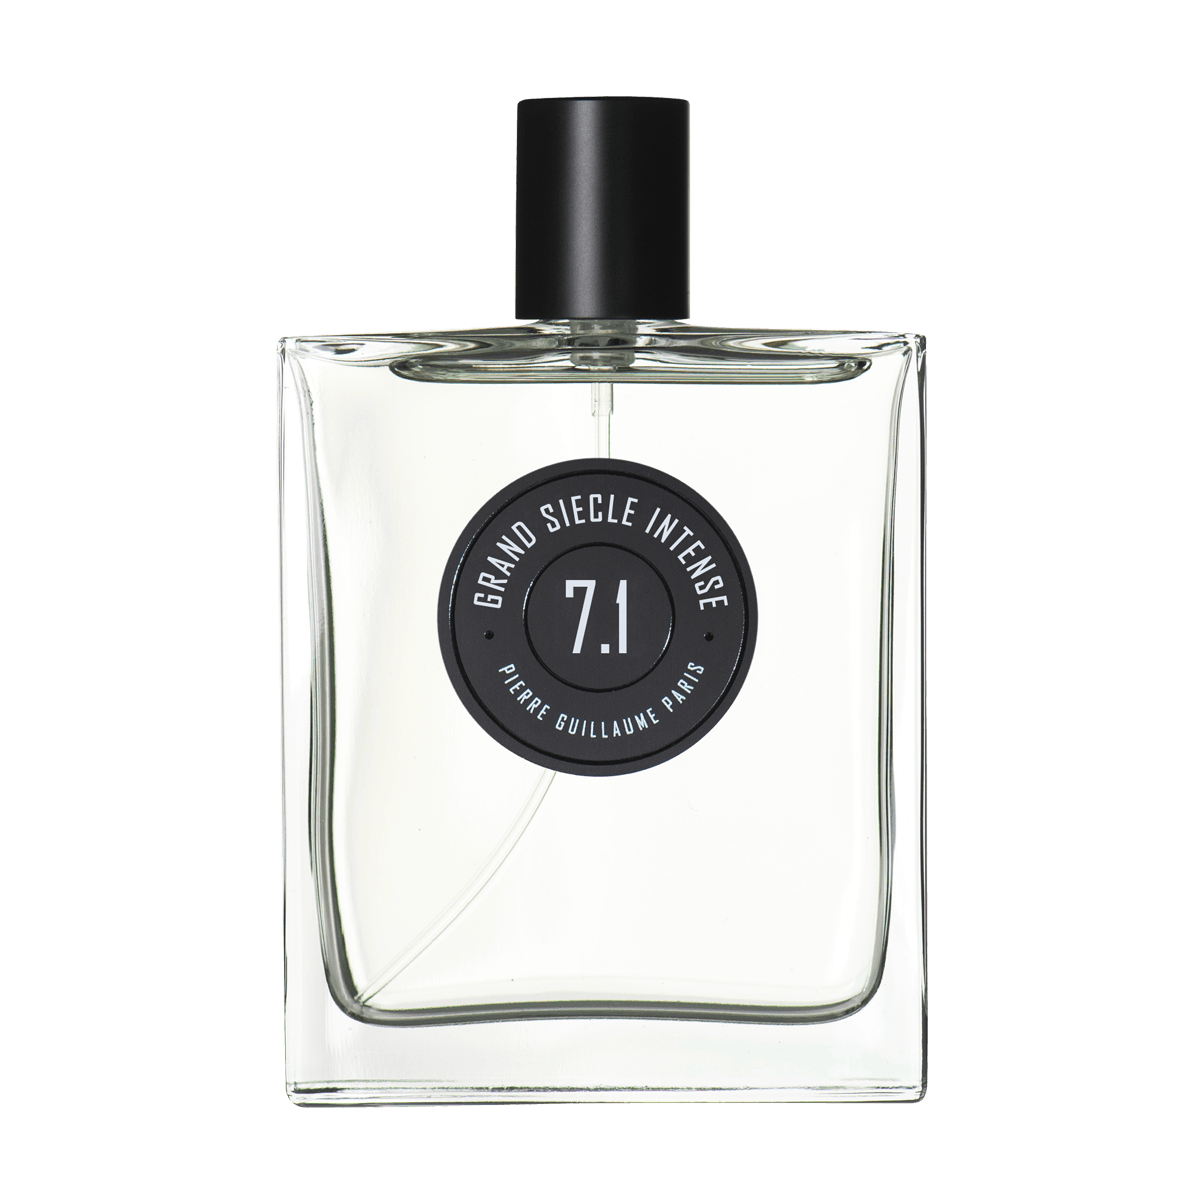 Pierre Guillaume Paris - 07.1 Grand Siecle Intese | Perfume Lounge